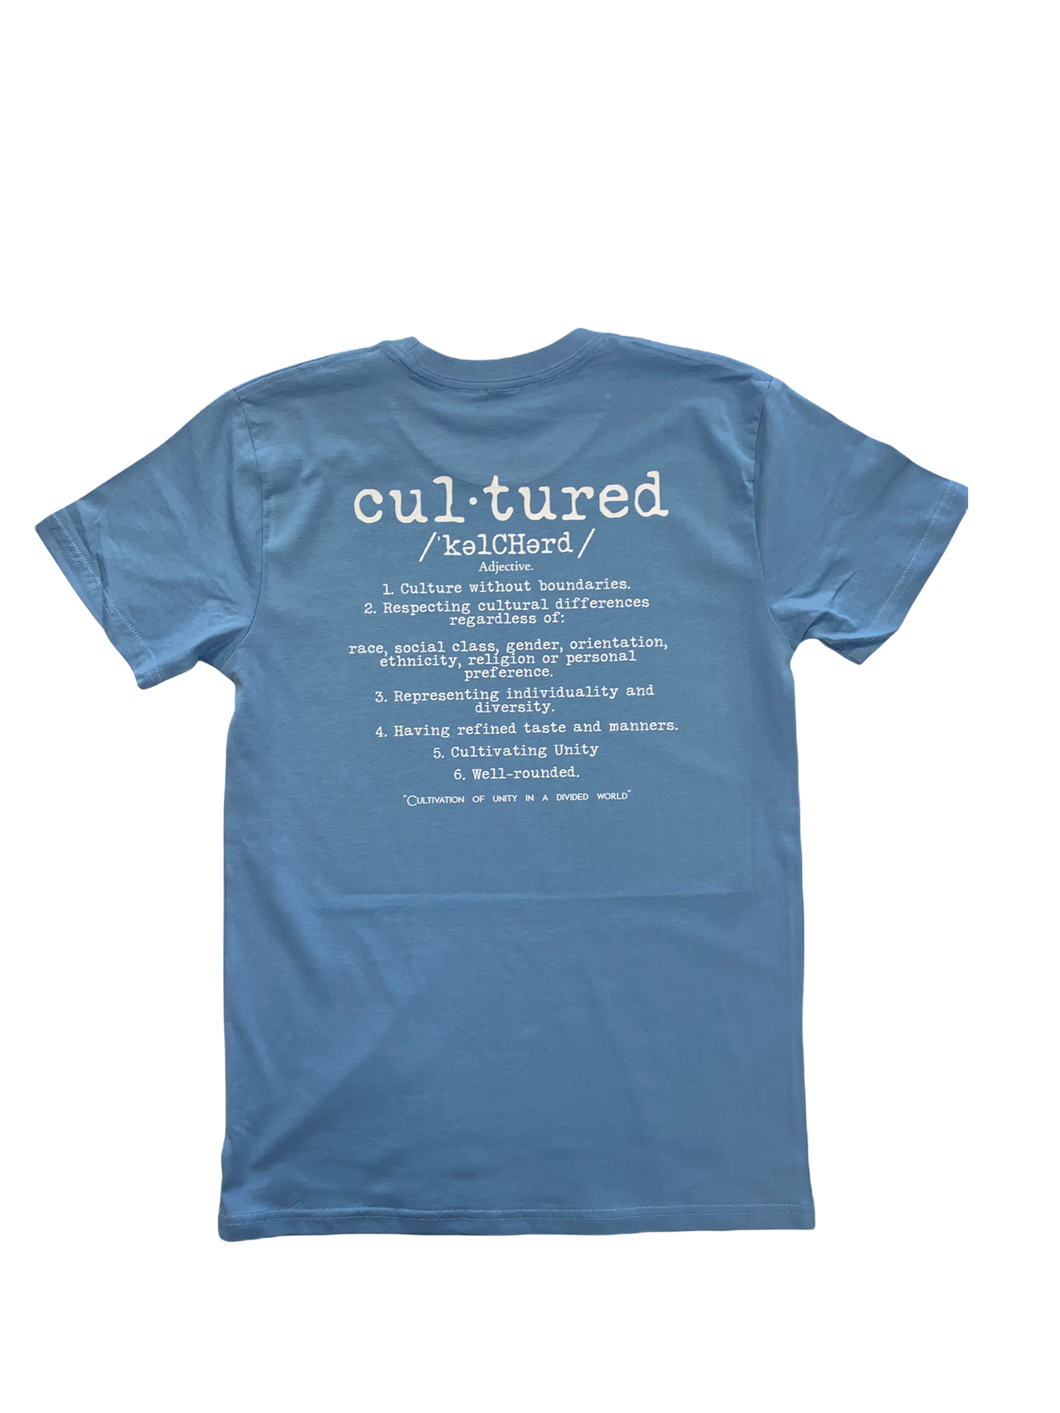 Cultured definition T-shirt